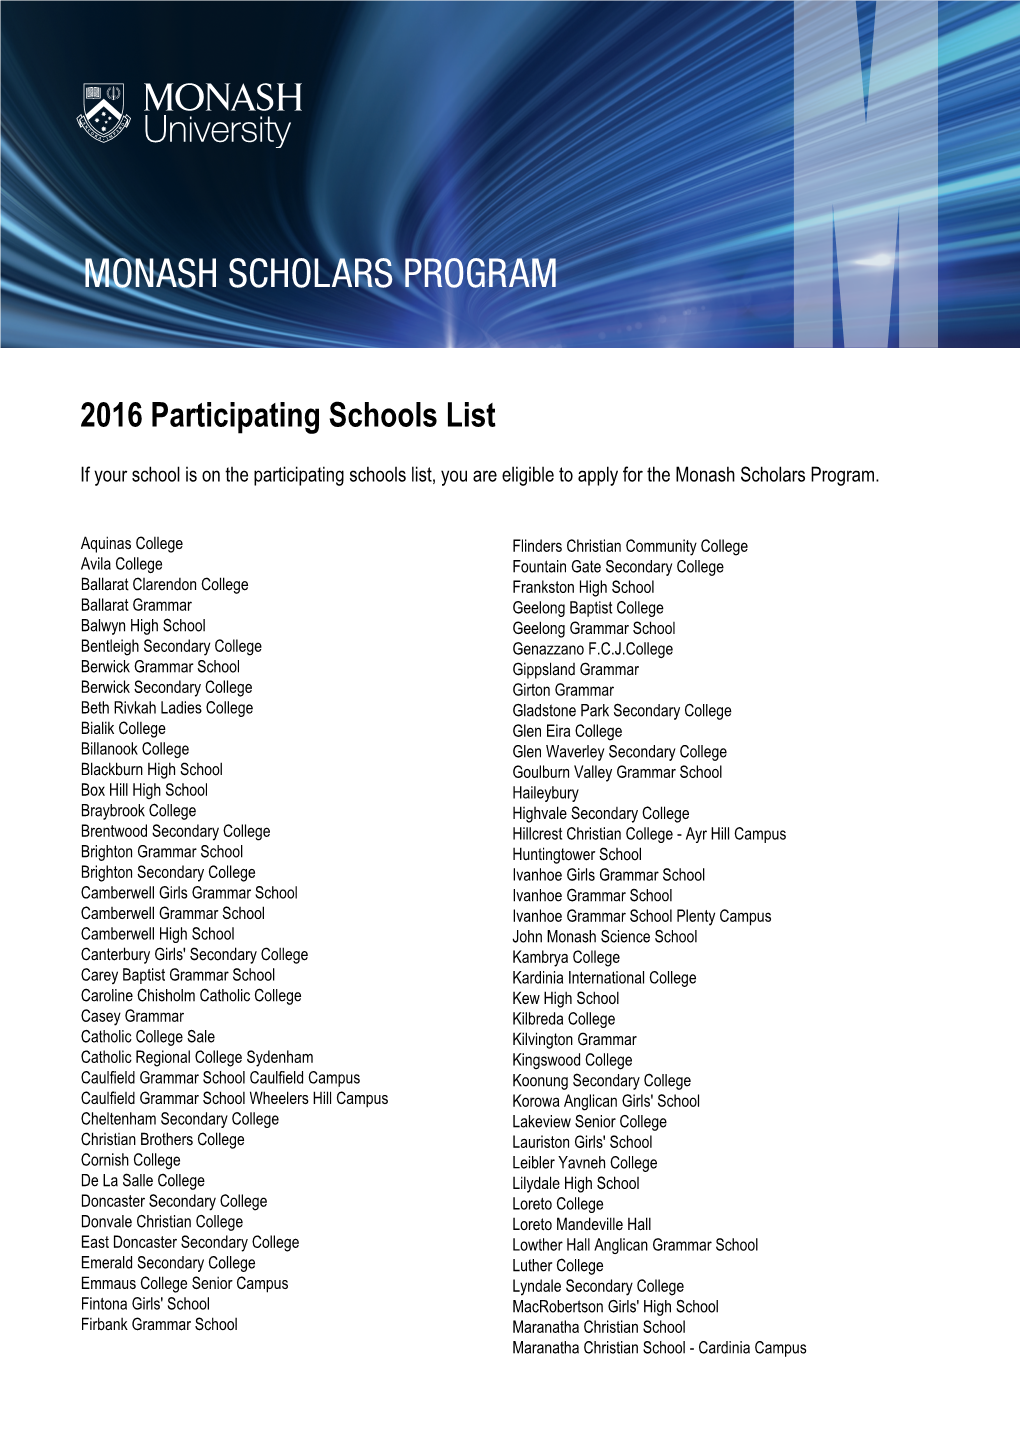 Monash Scholars Program